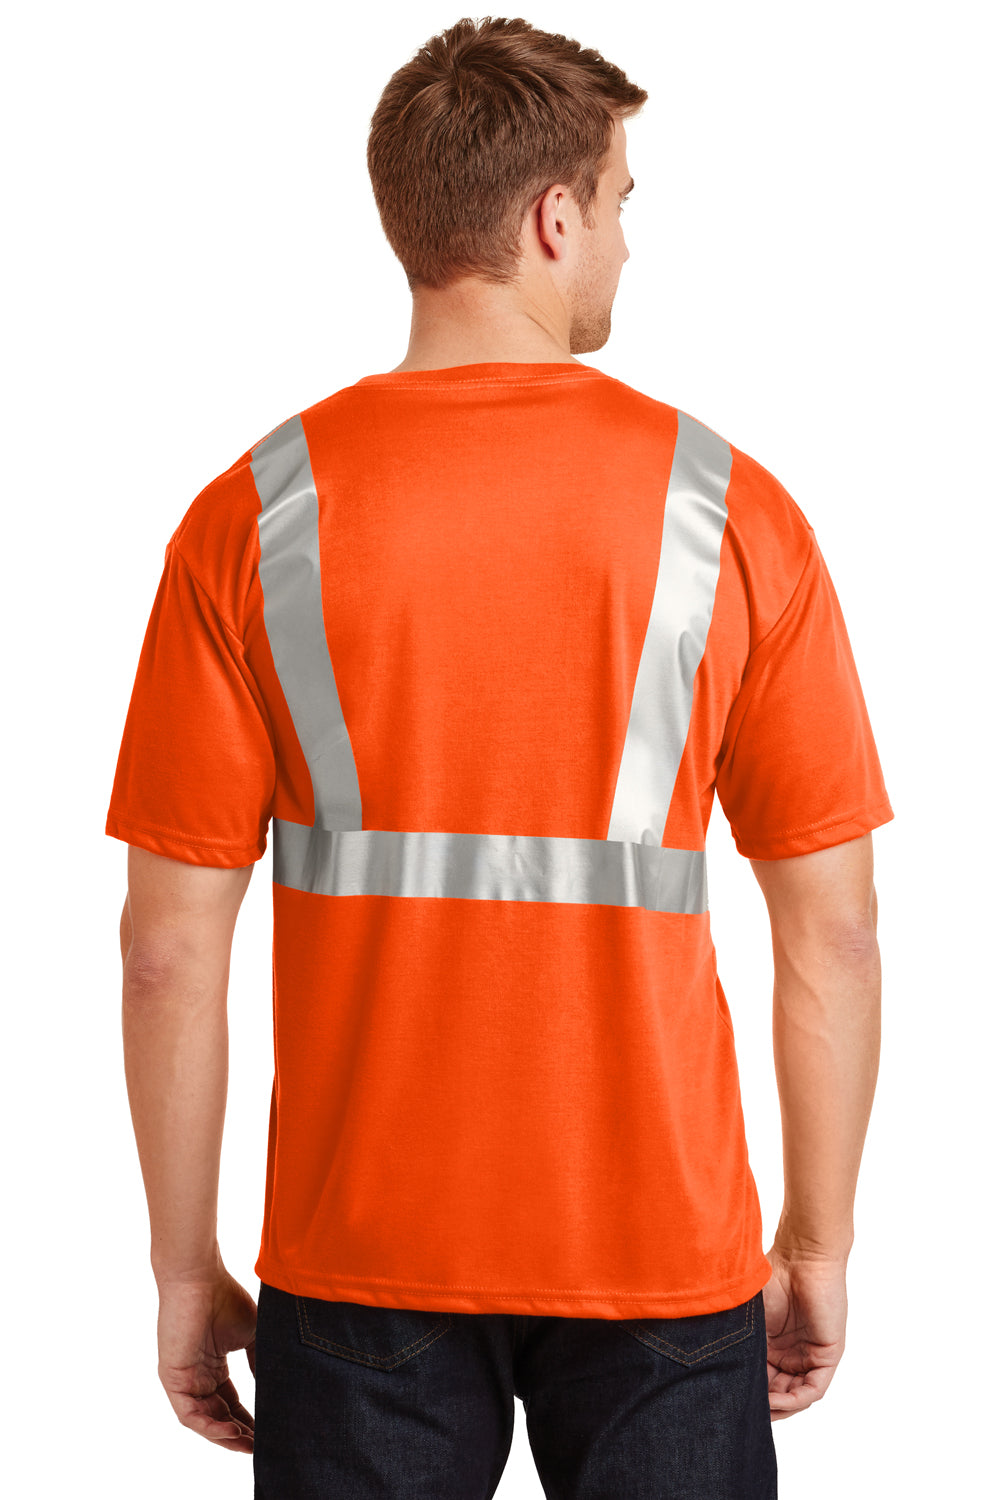 CornerStone CS401 Mens Moisture Wicking Short Sleeve Crewneck T-Shirt w/ Pocket Safety Orange Back